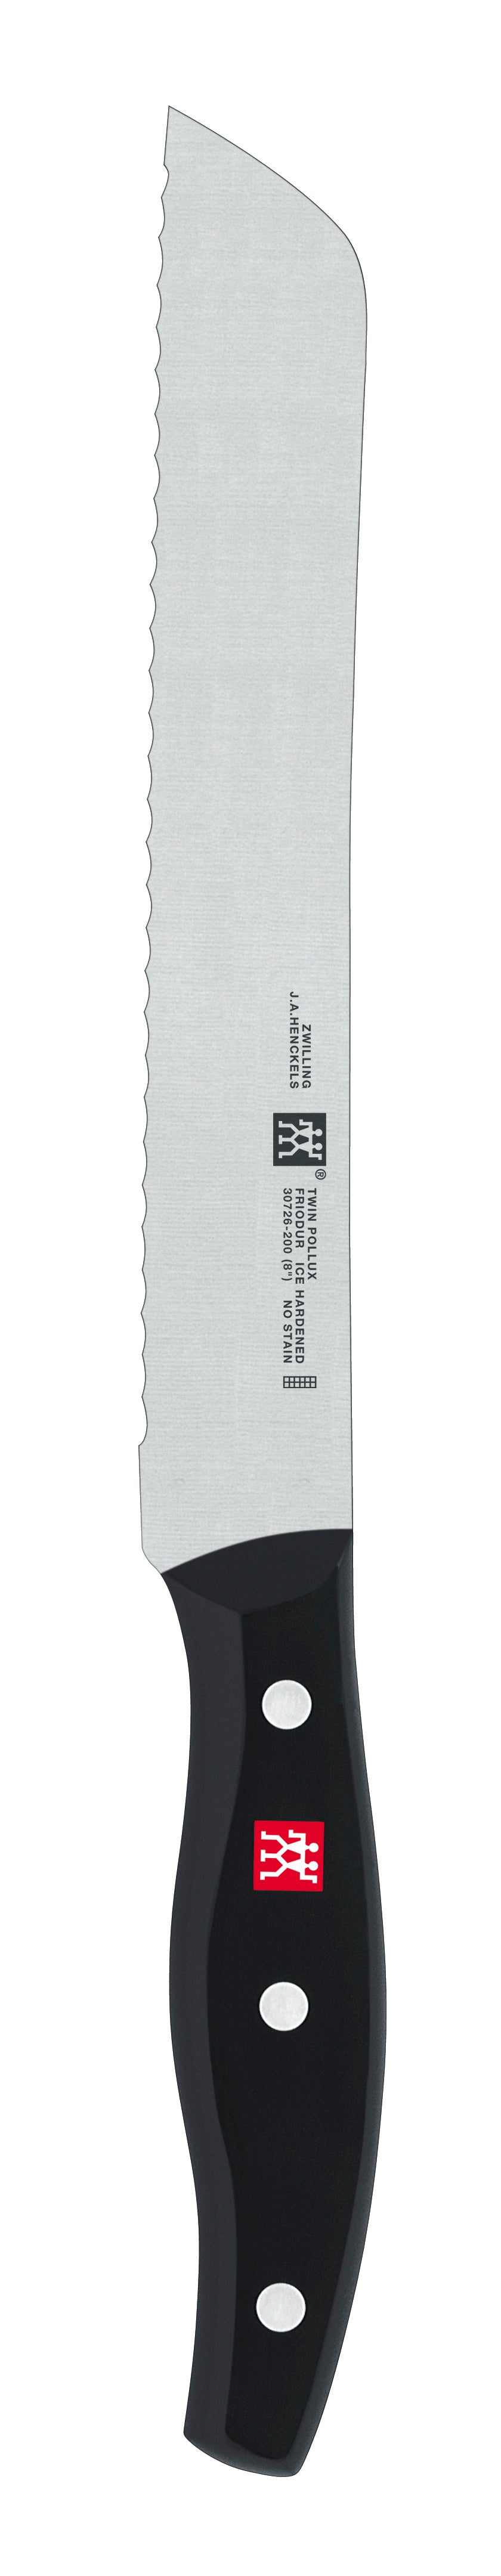 Zwilling TWIN POLLUX Serrated bread knife, 20 cm